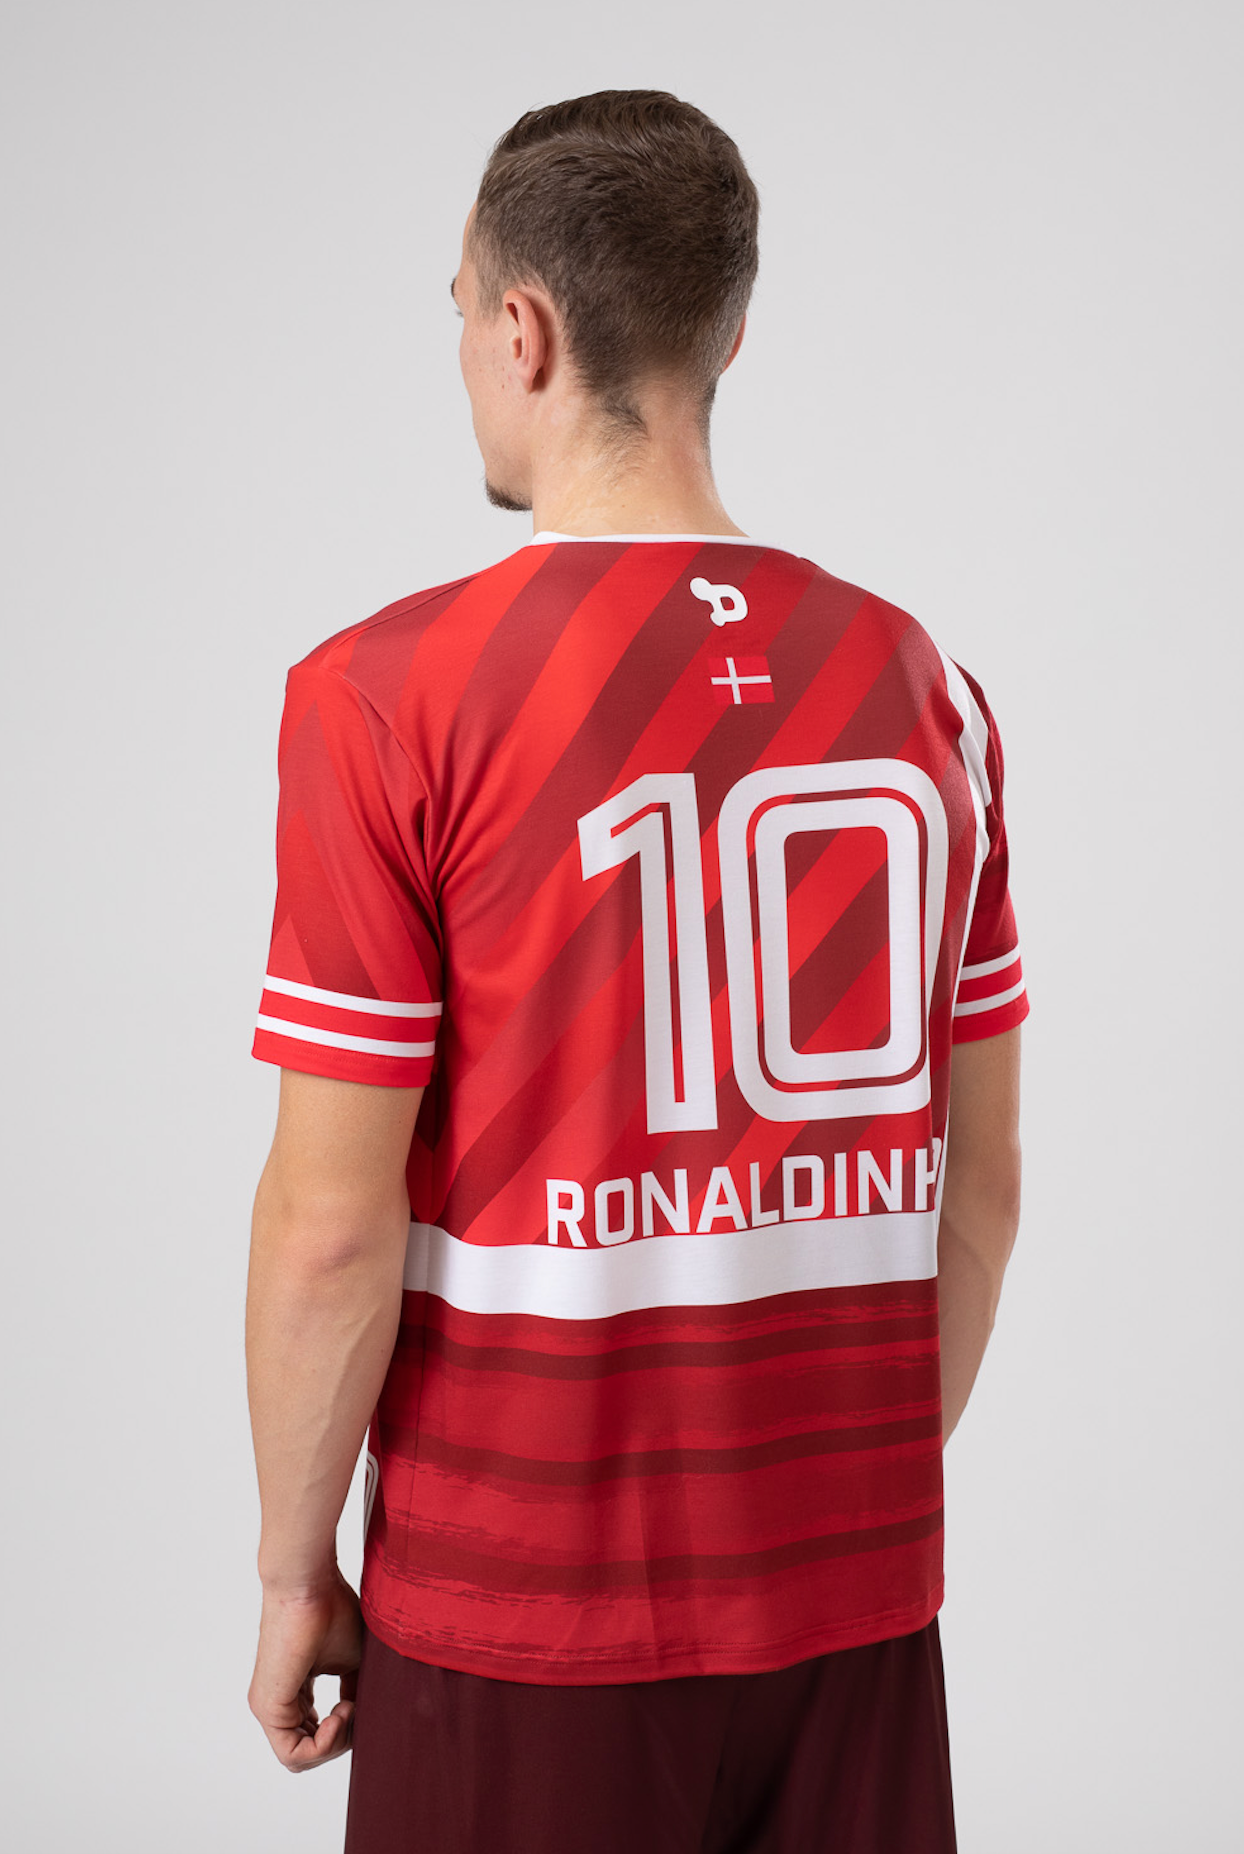 Ronaldinho Denmark Jersey/Camisa Wholesale